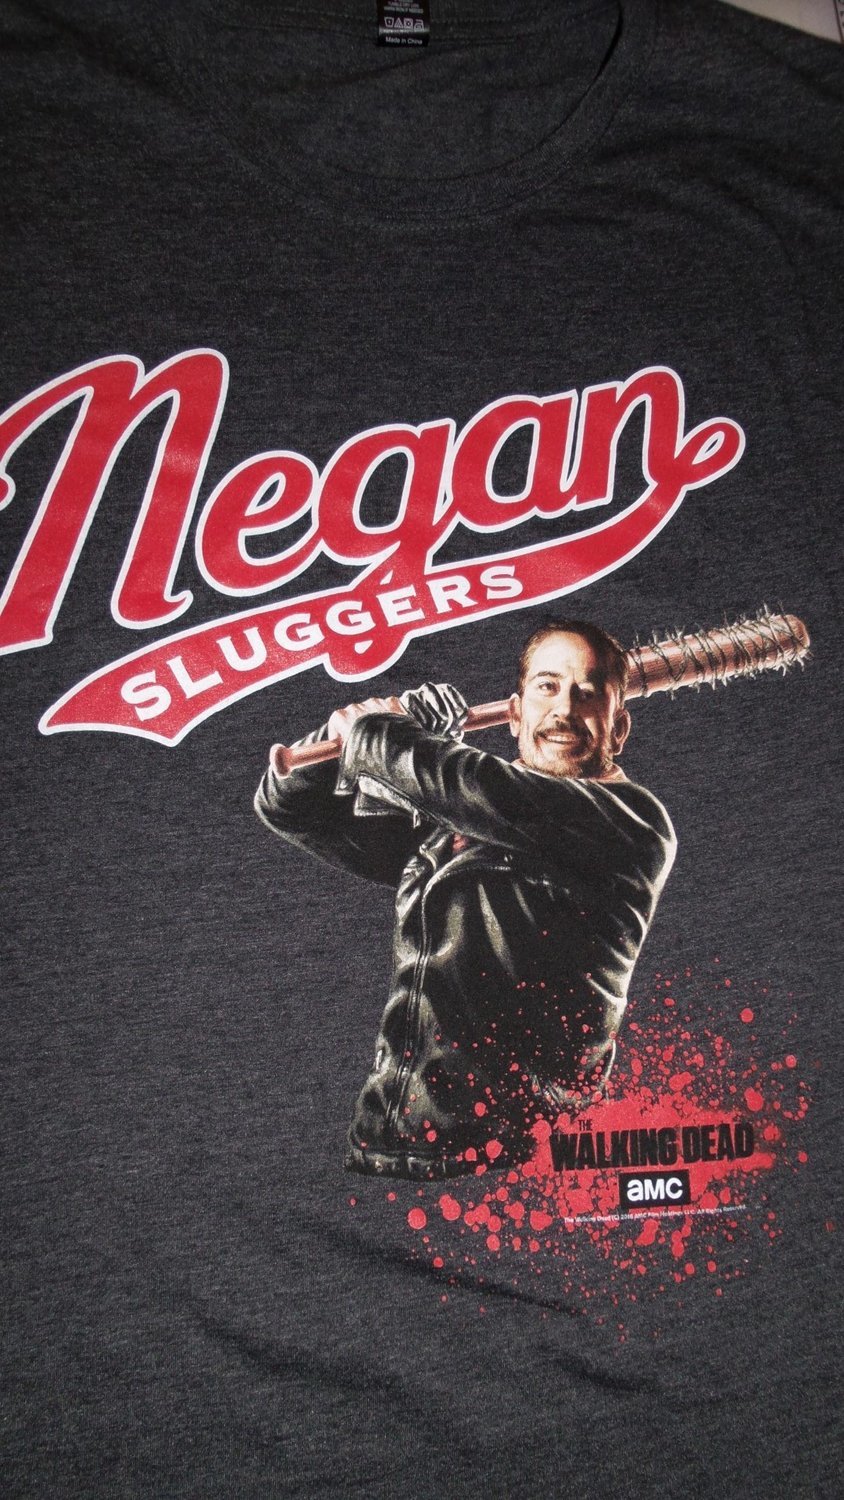 Walking Dead "Negan Sluggers" T-Shirt